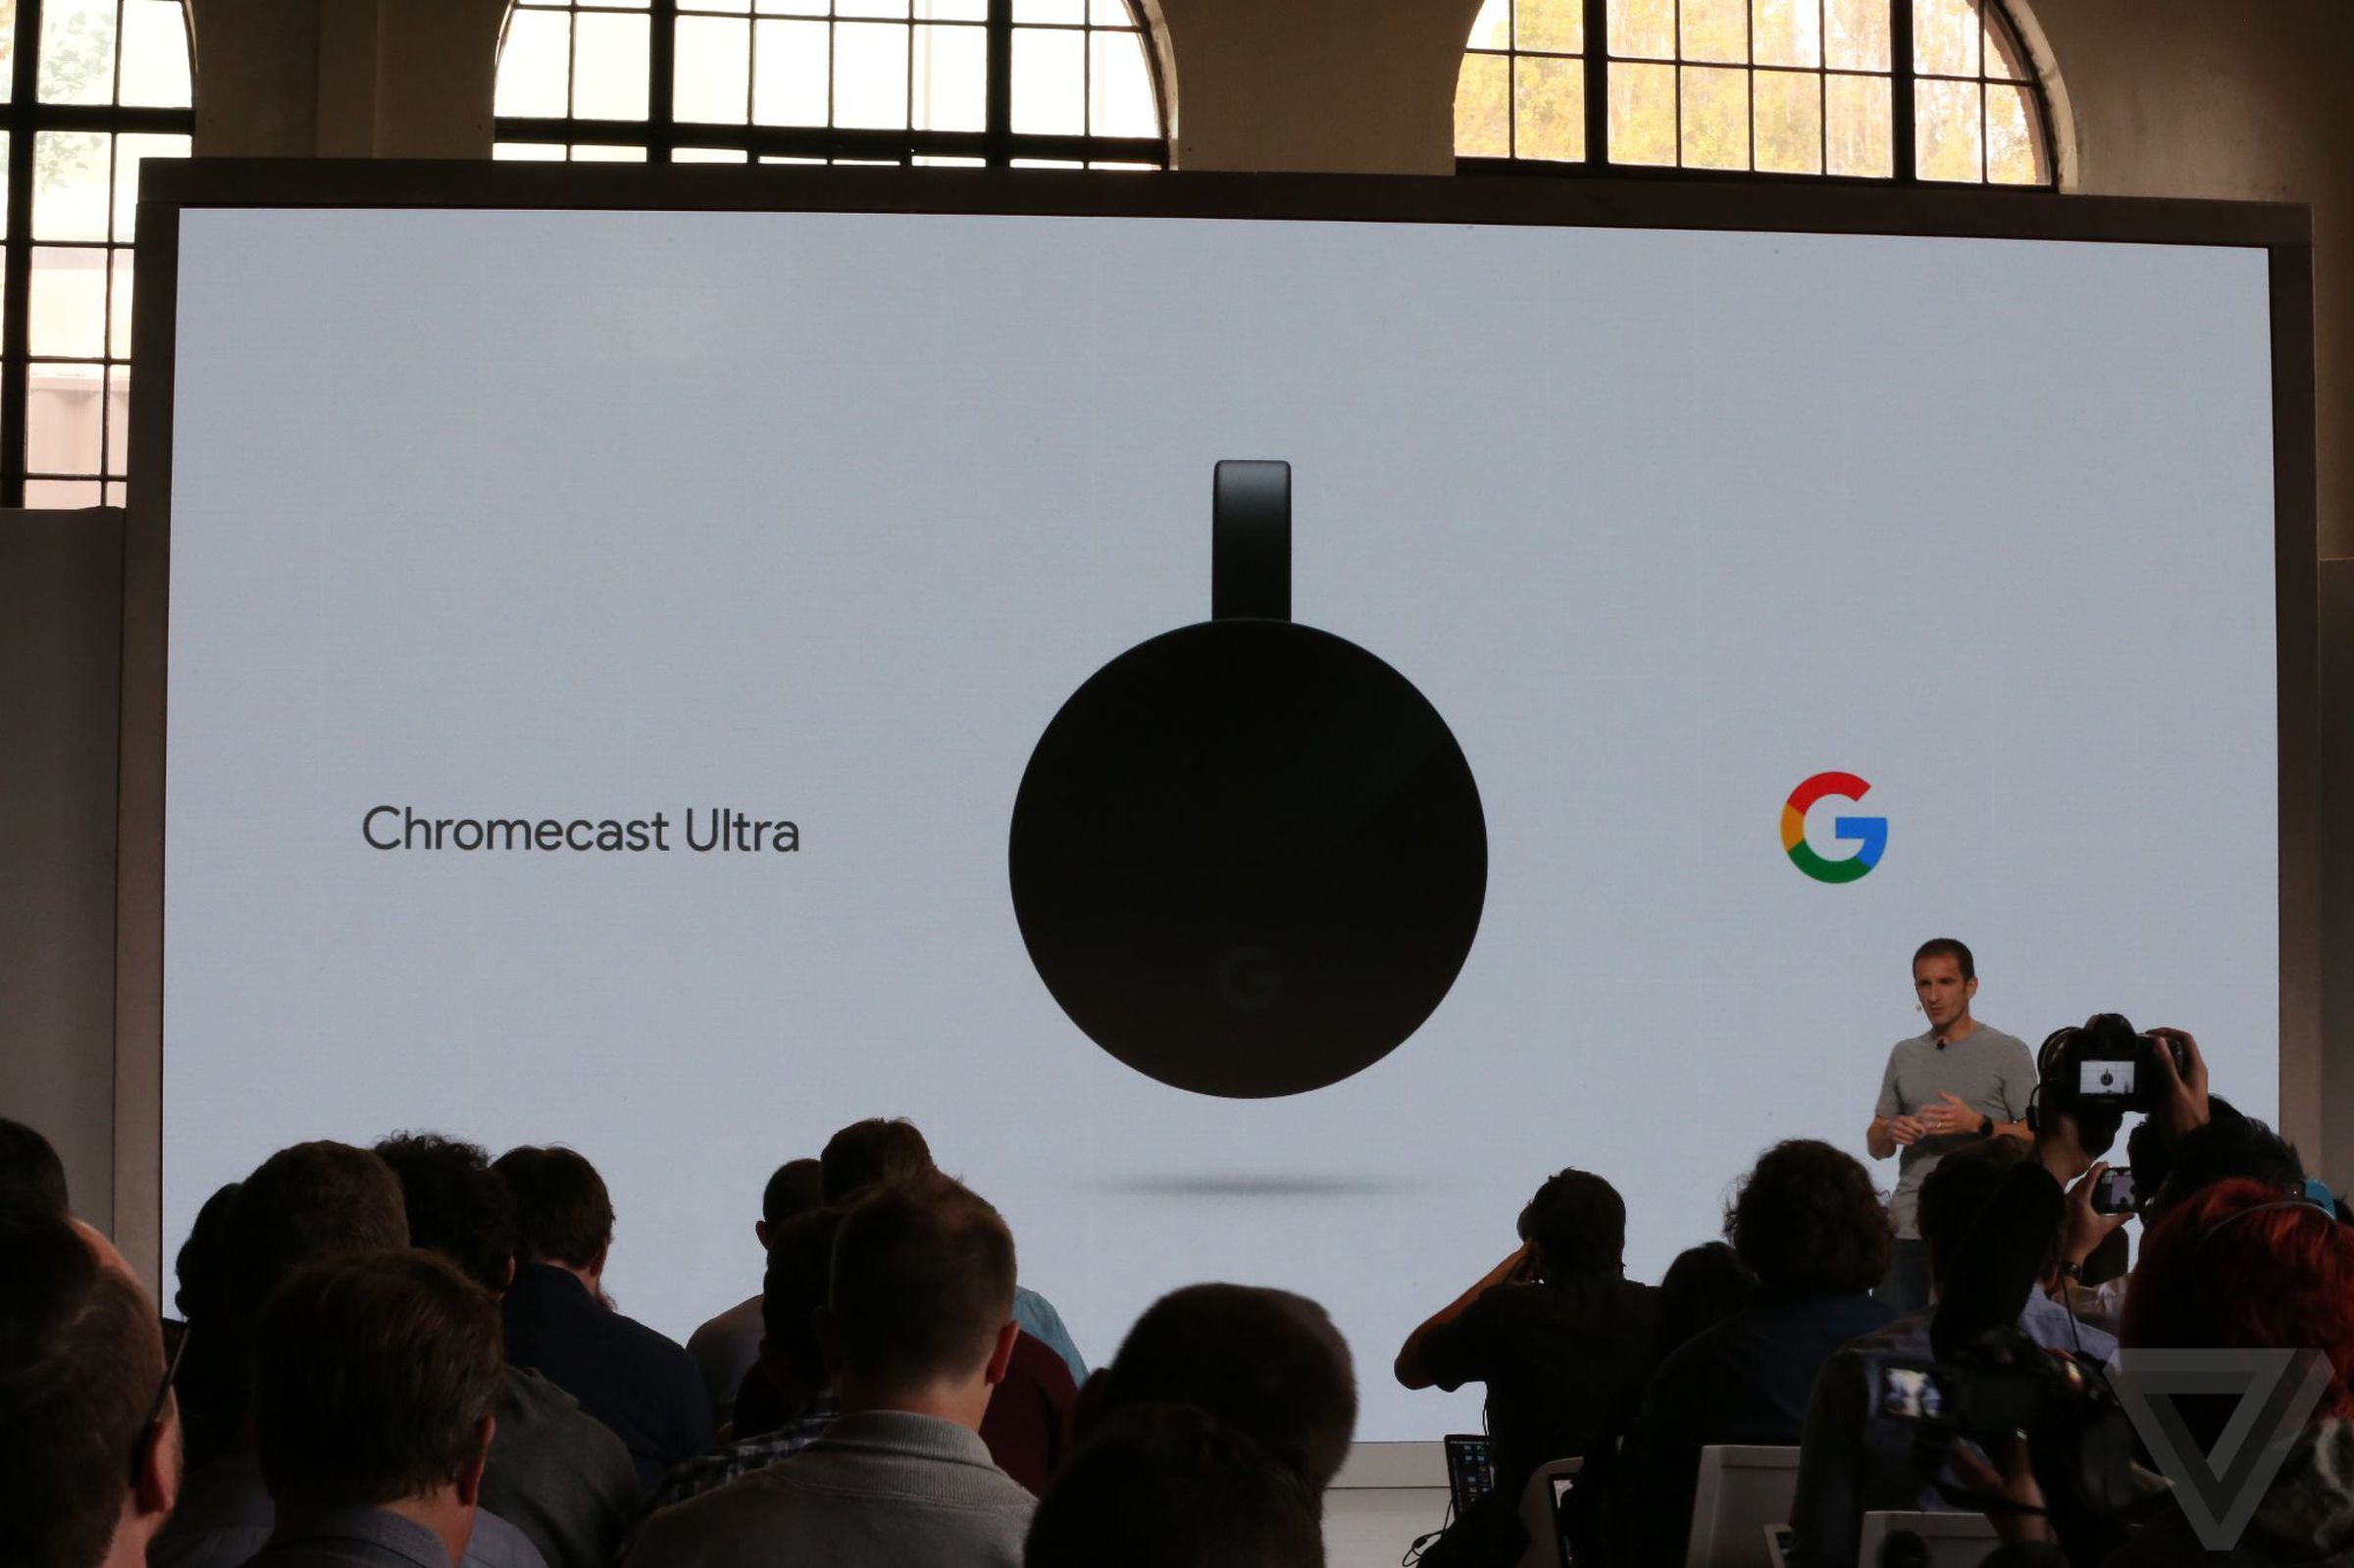 Google's Chromecast Ultra